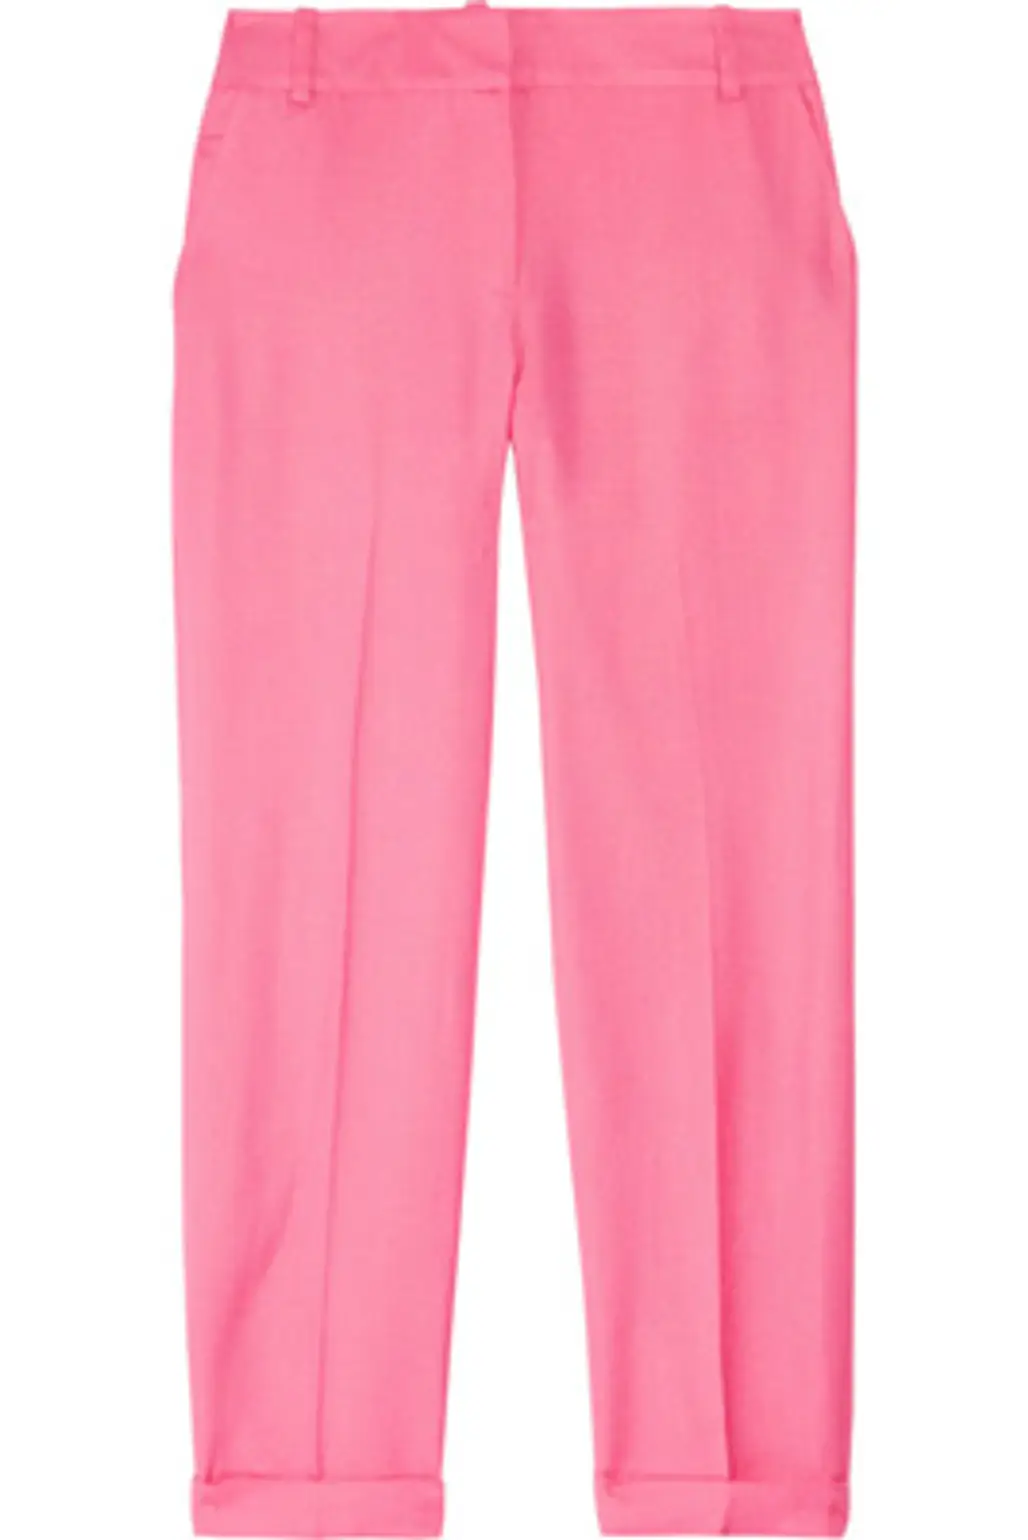 Cropped Pink Pants